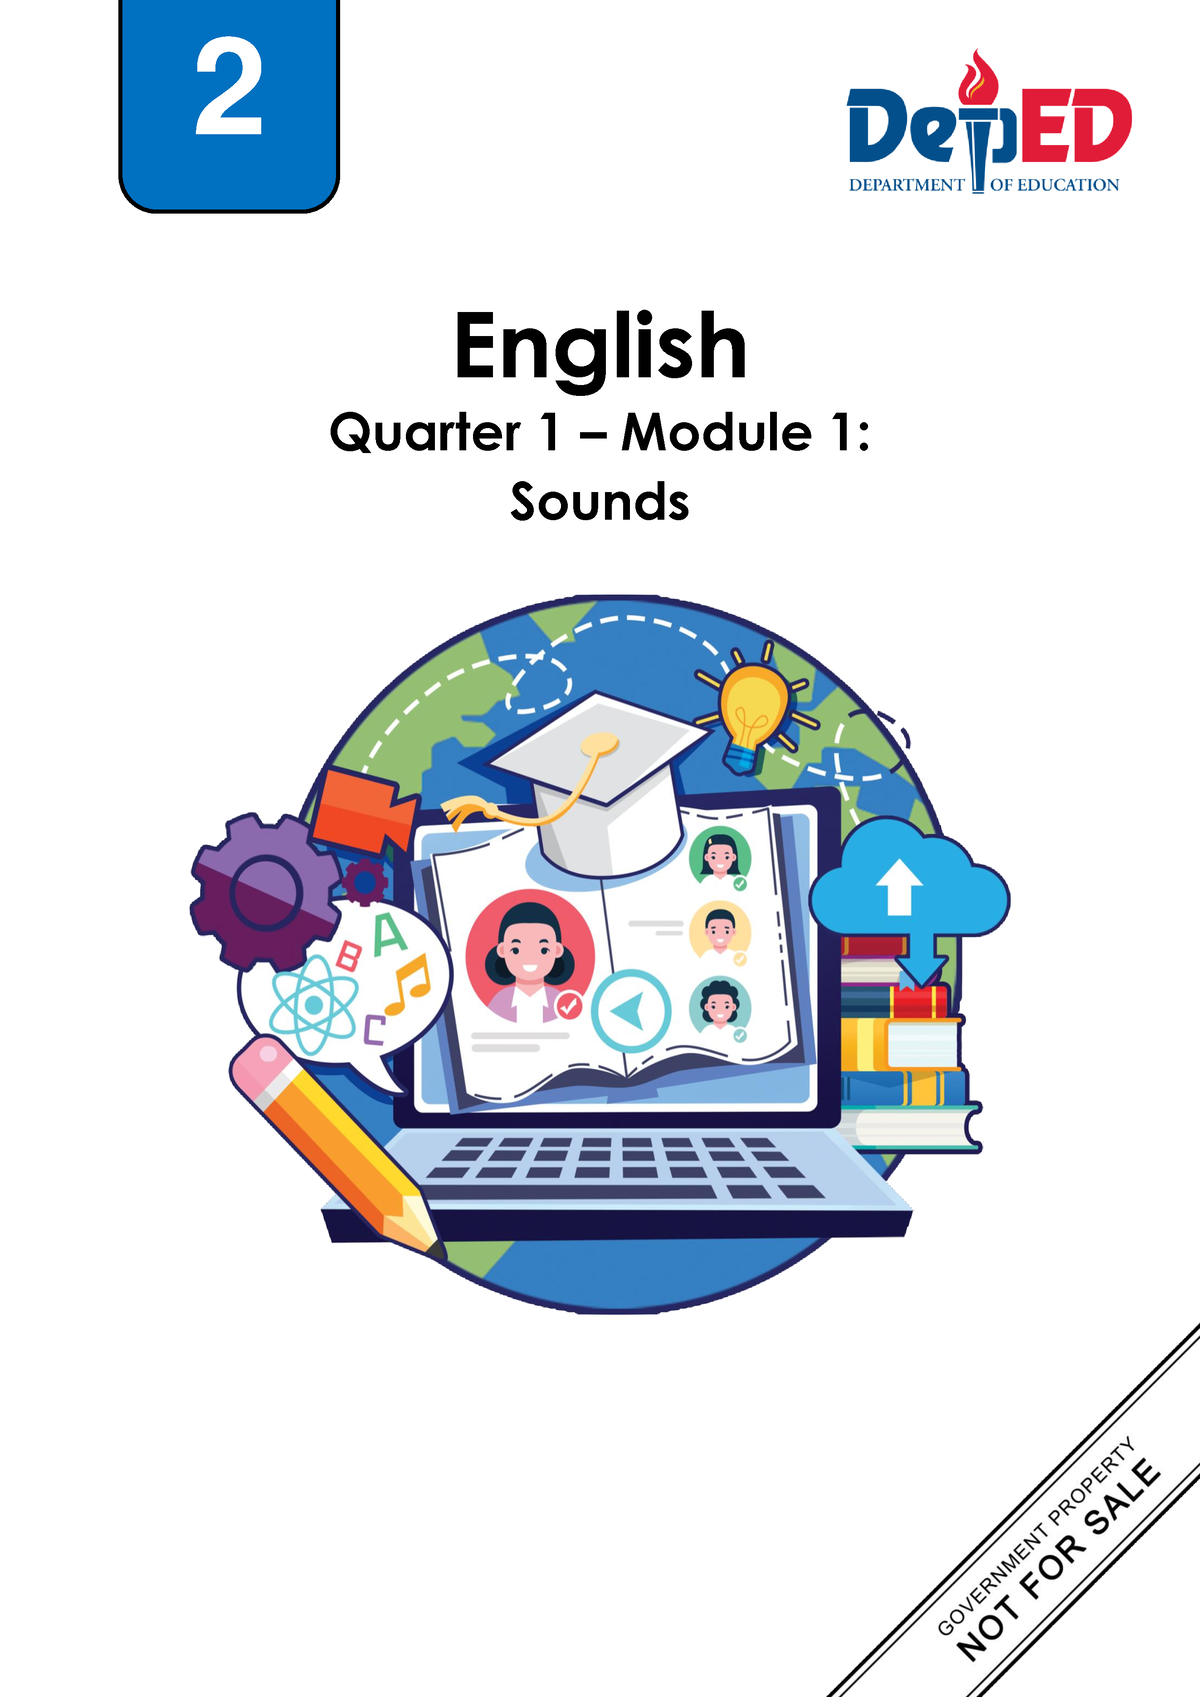 q1-english-2-module-1-educational-purposes-only-english-quarter-1